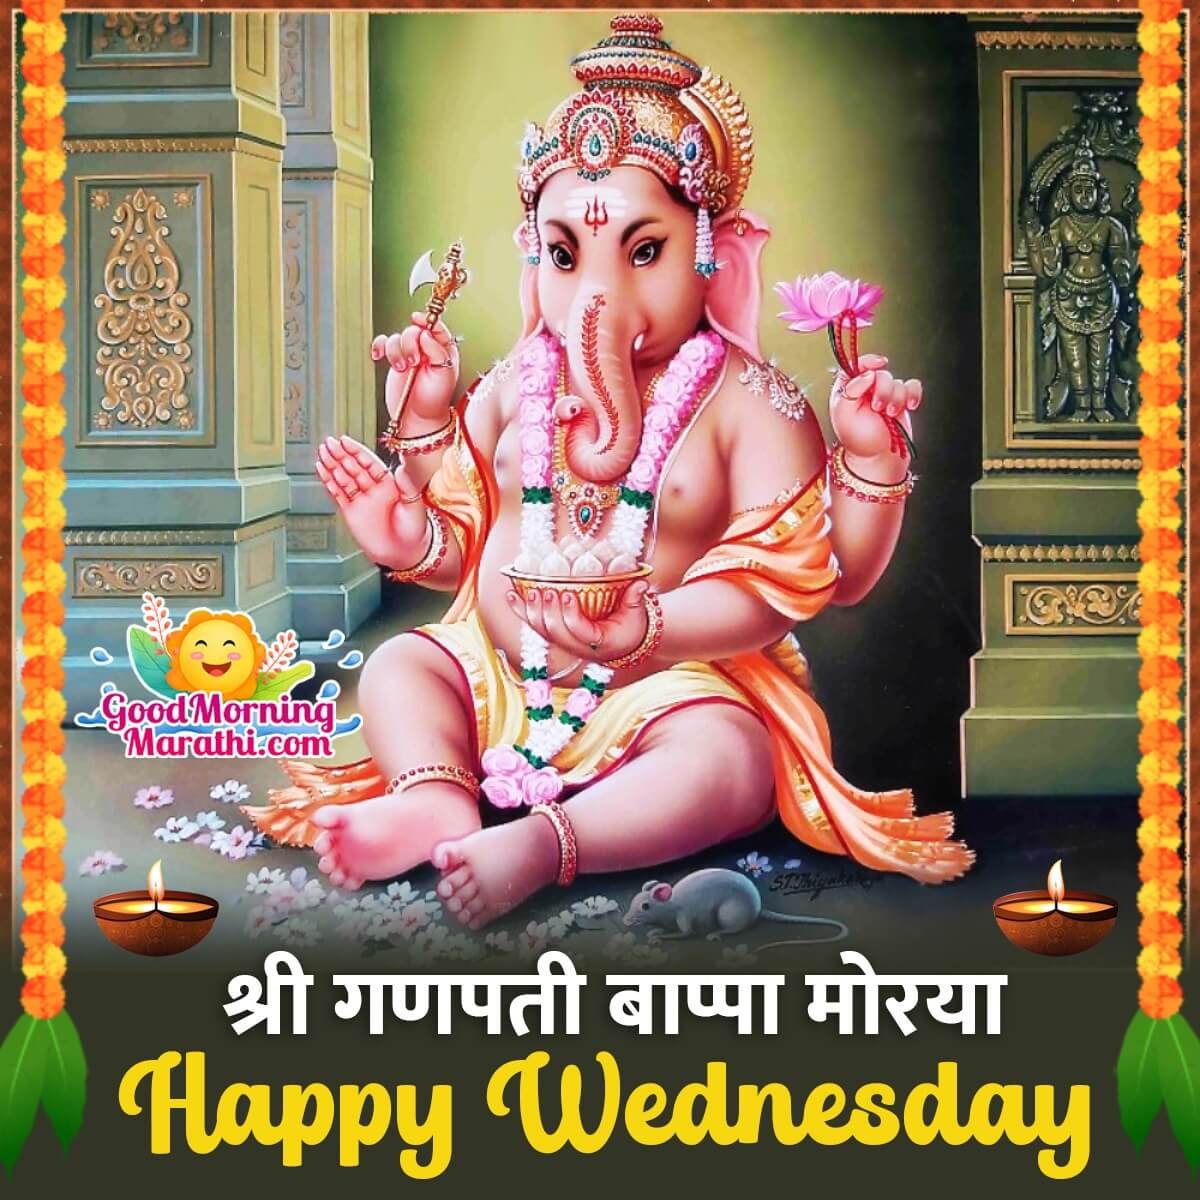 Happy Wednesday Ganpati Bappa